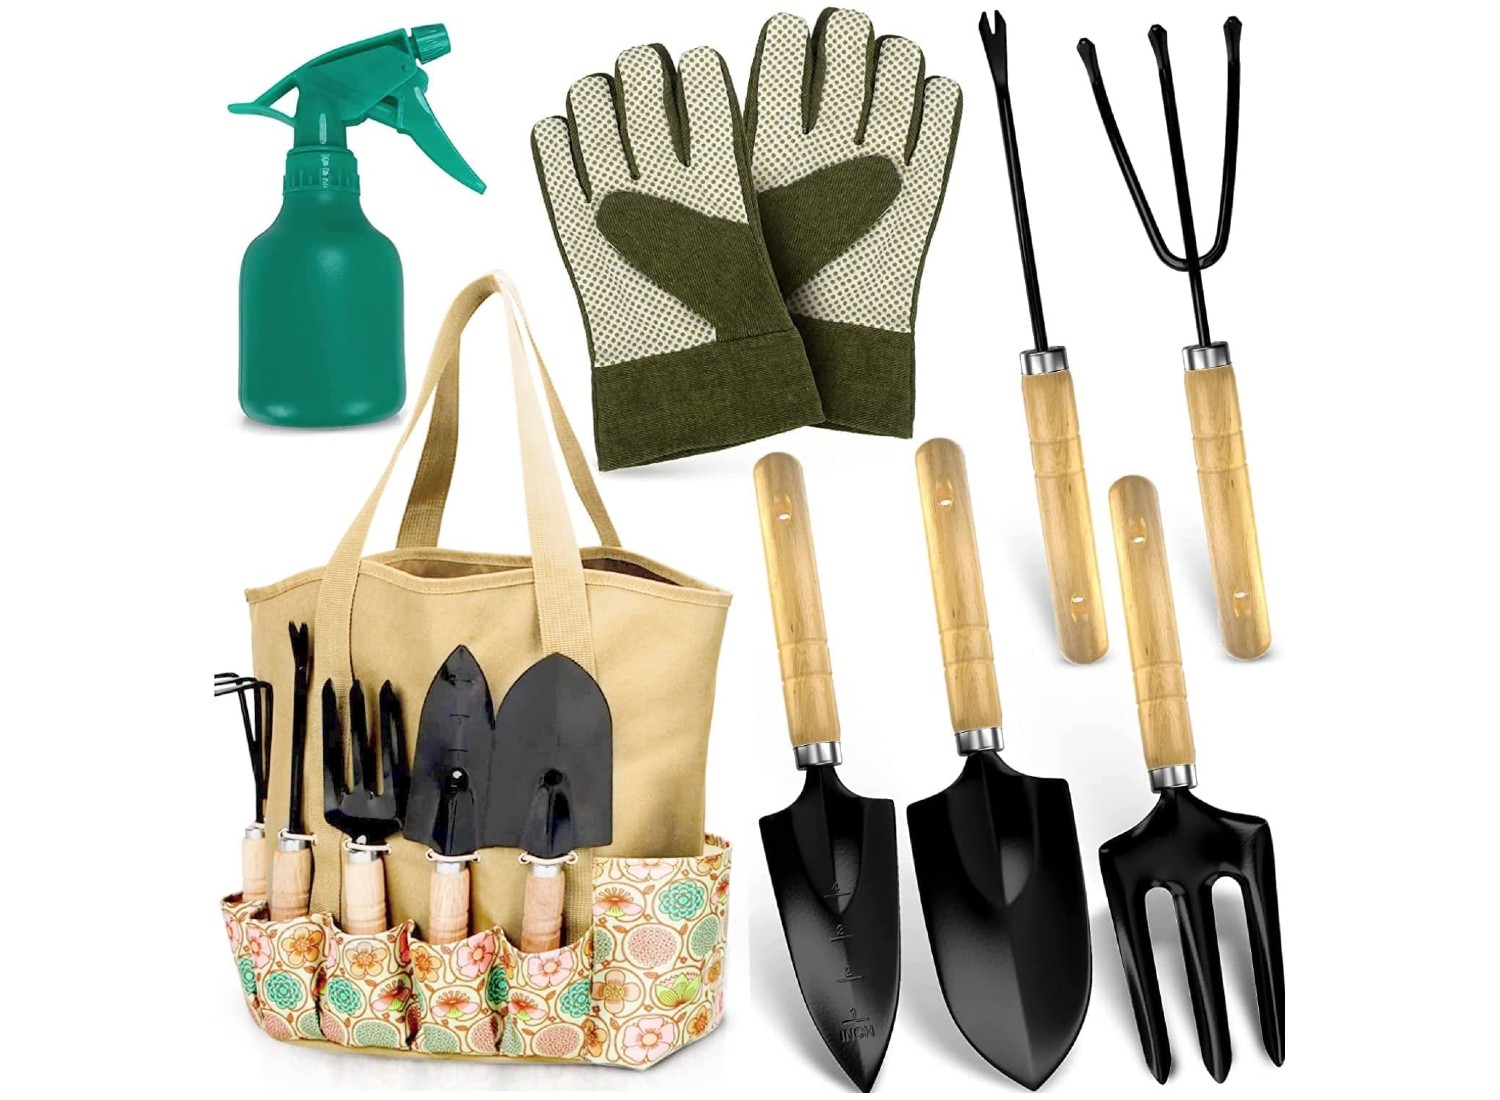 WORKPRO Garden Tools Set, Piece, Stainless Steel Heavy Duty Gardening Tools  with Wooden Handle, Including Garden Tote, Gloves, Trowel, Hand Weeder,